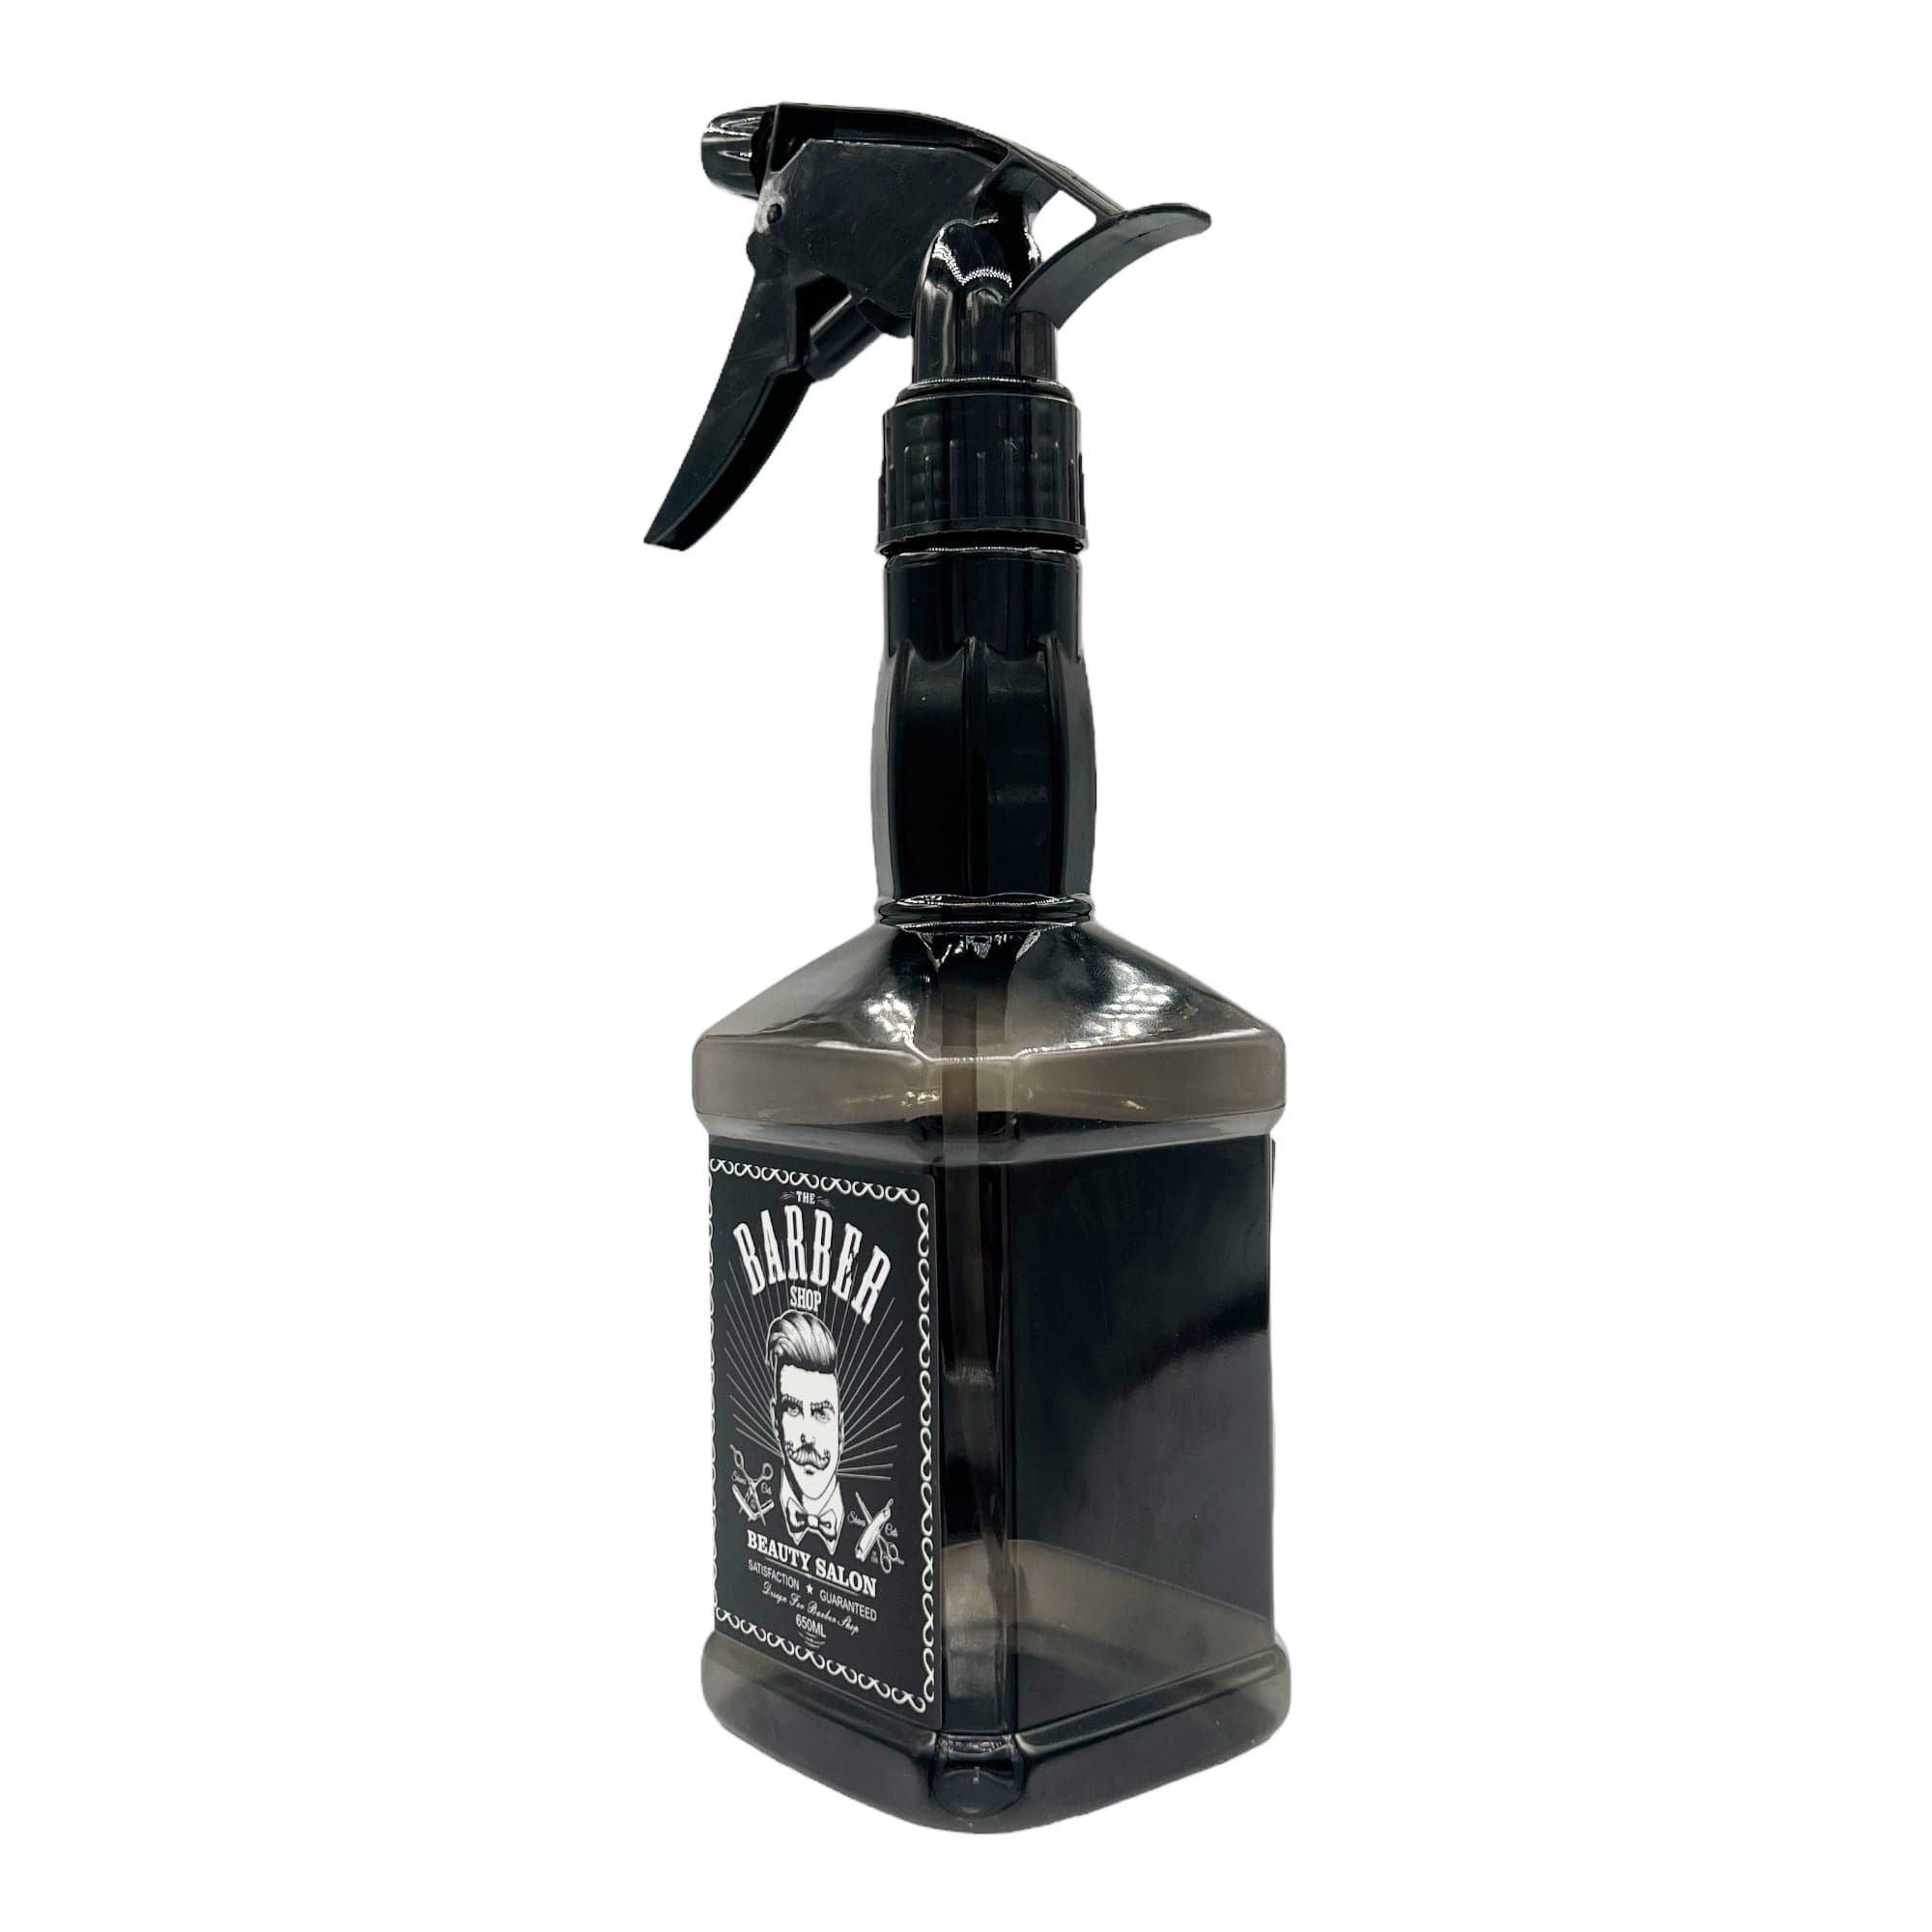 Eson - Water Spray Bottle 650ml Extreme Mist Sprayer Whisky Style (Silver)